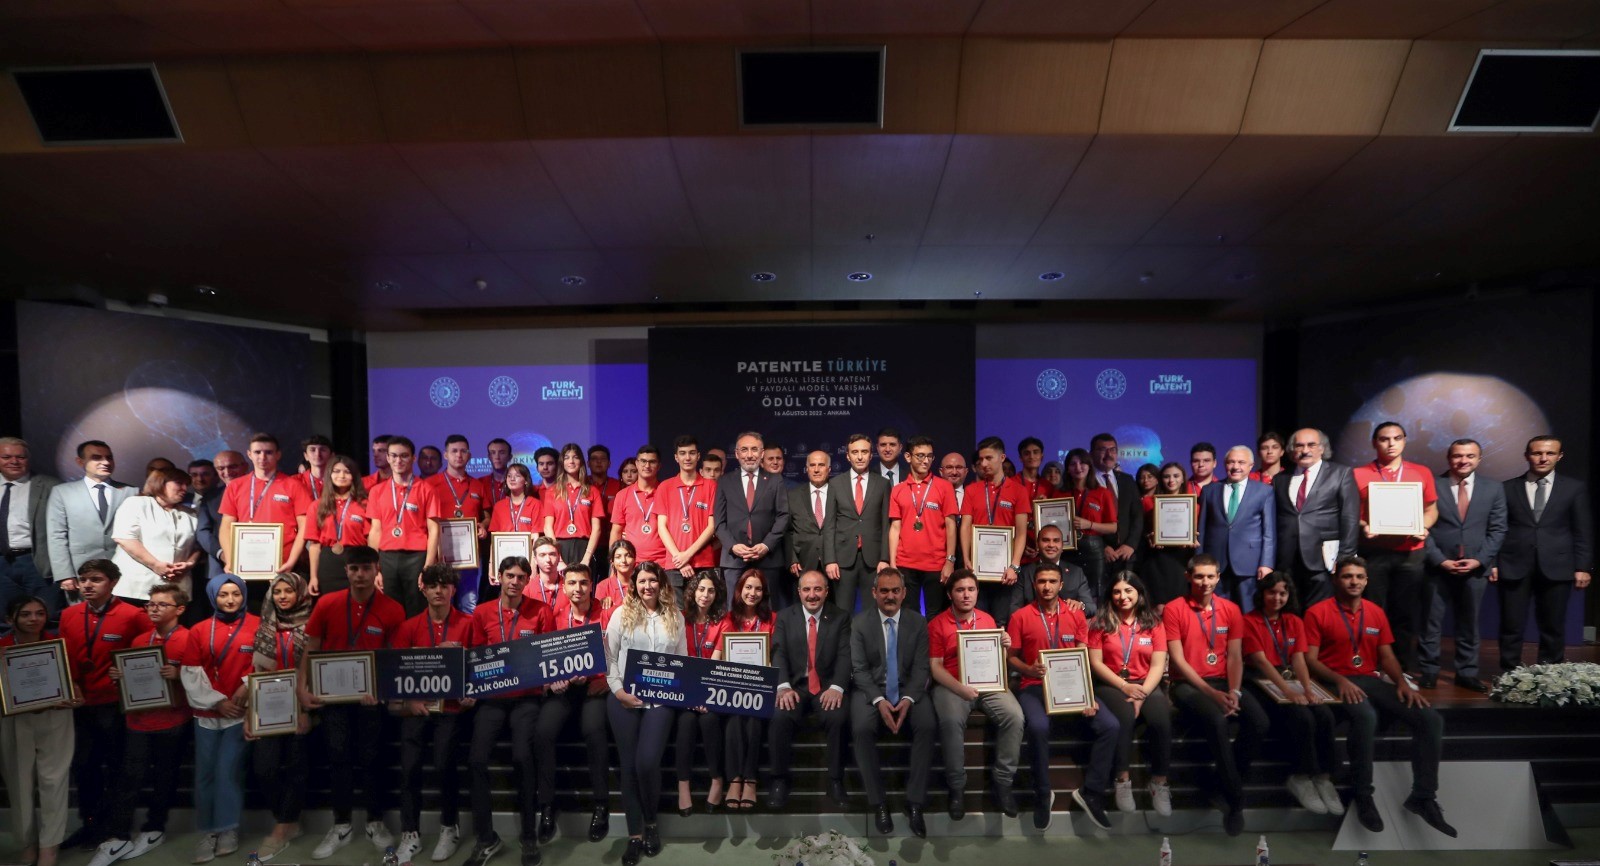 “Patentle Türkiye” - Competition Award Ceremony